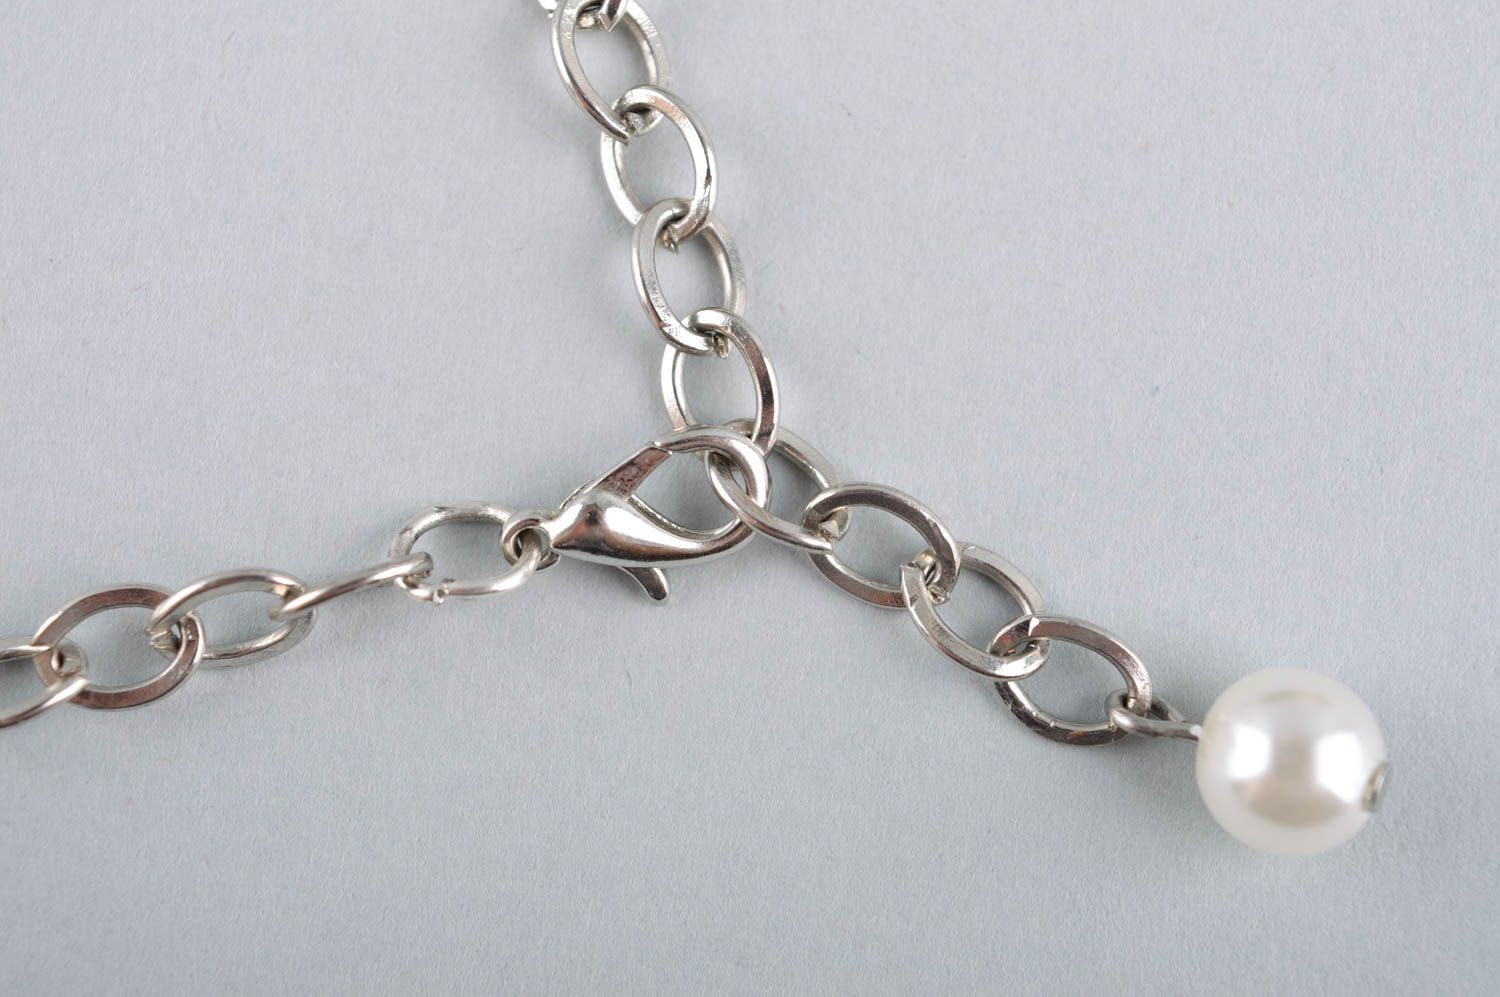 Stylish handmade beaded necklace artisan jewelry designs fashion accessories photo 4